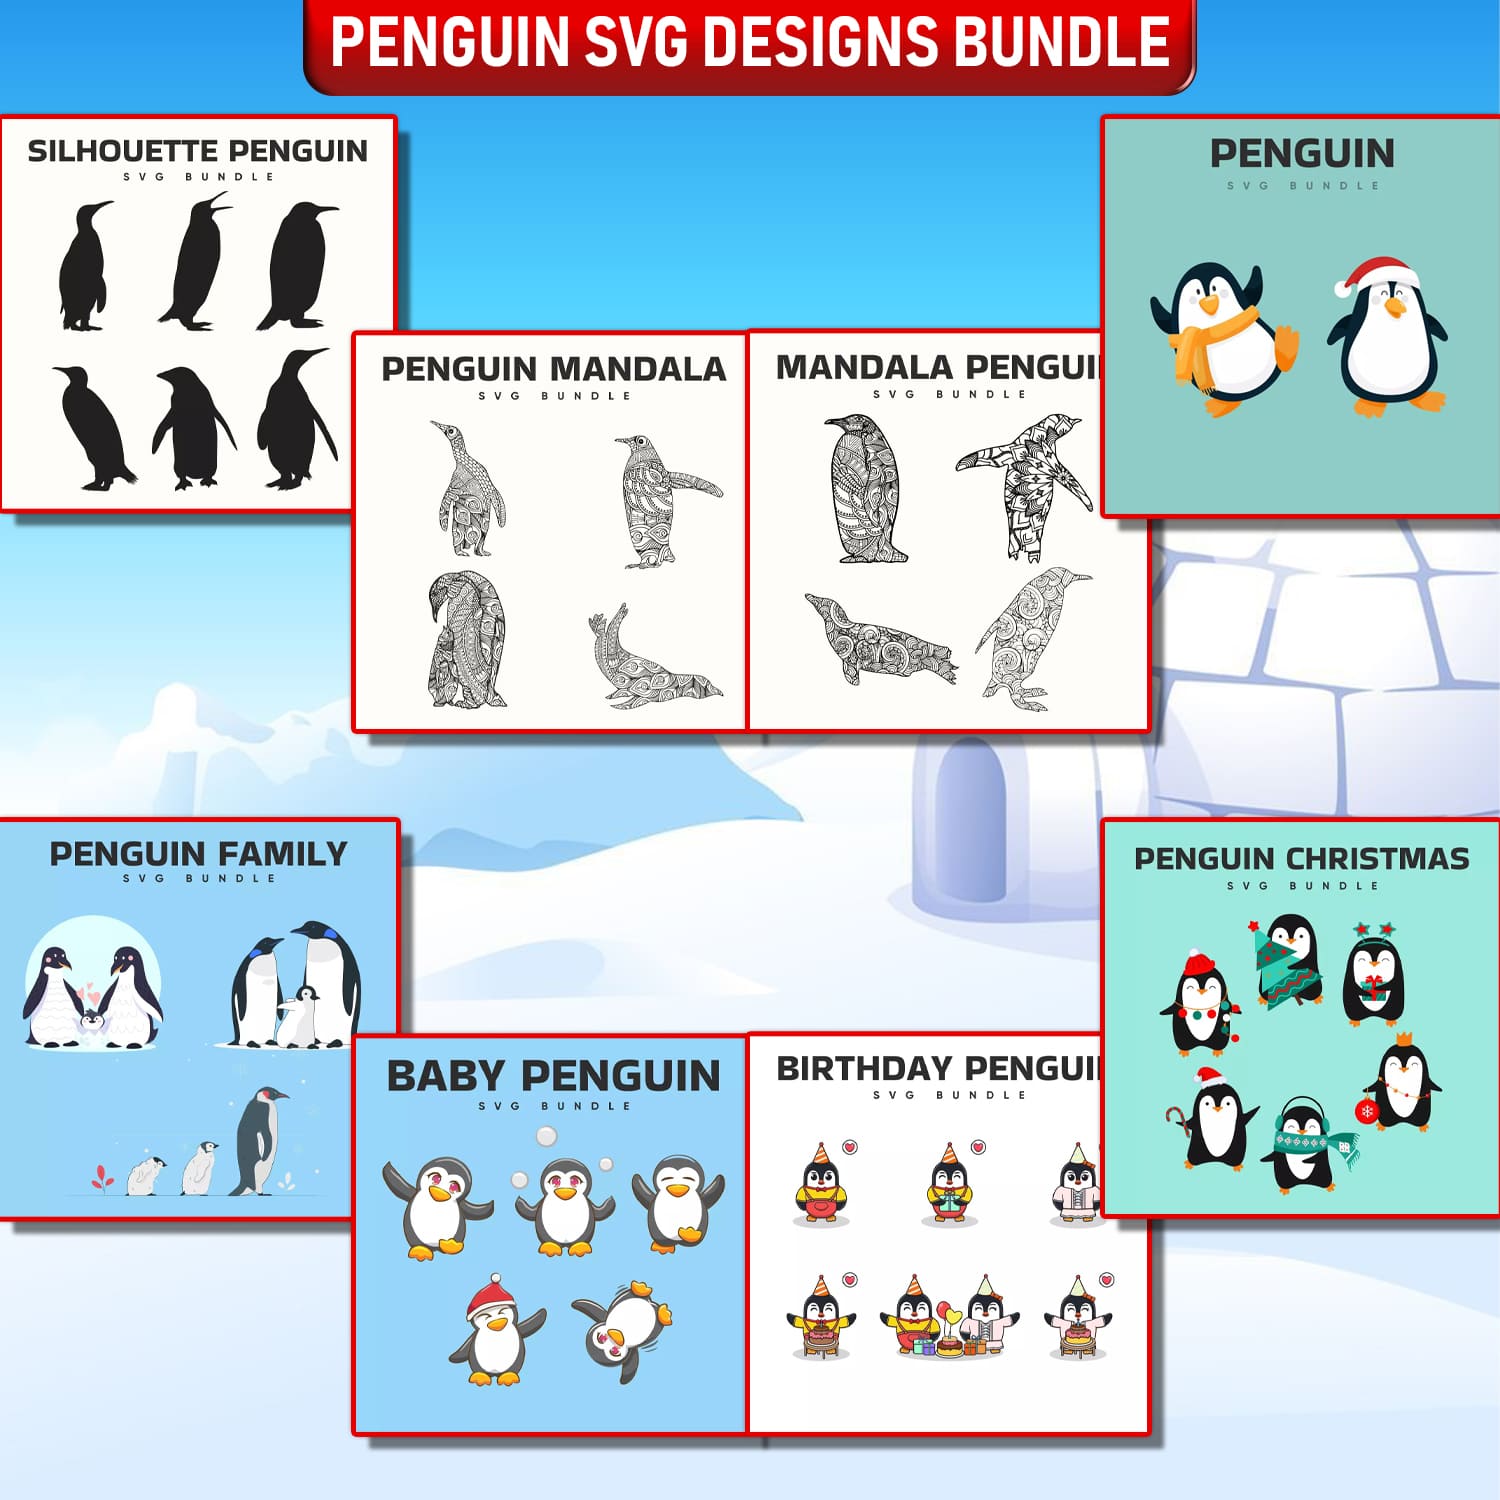 Penguin svg designs bundle.